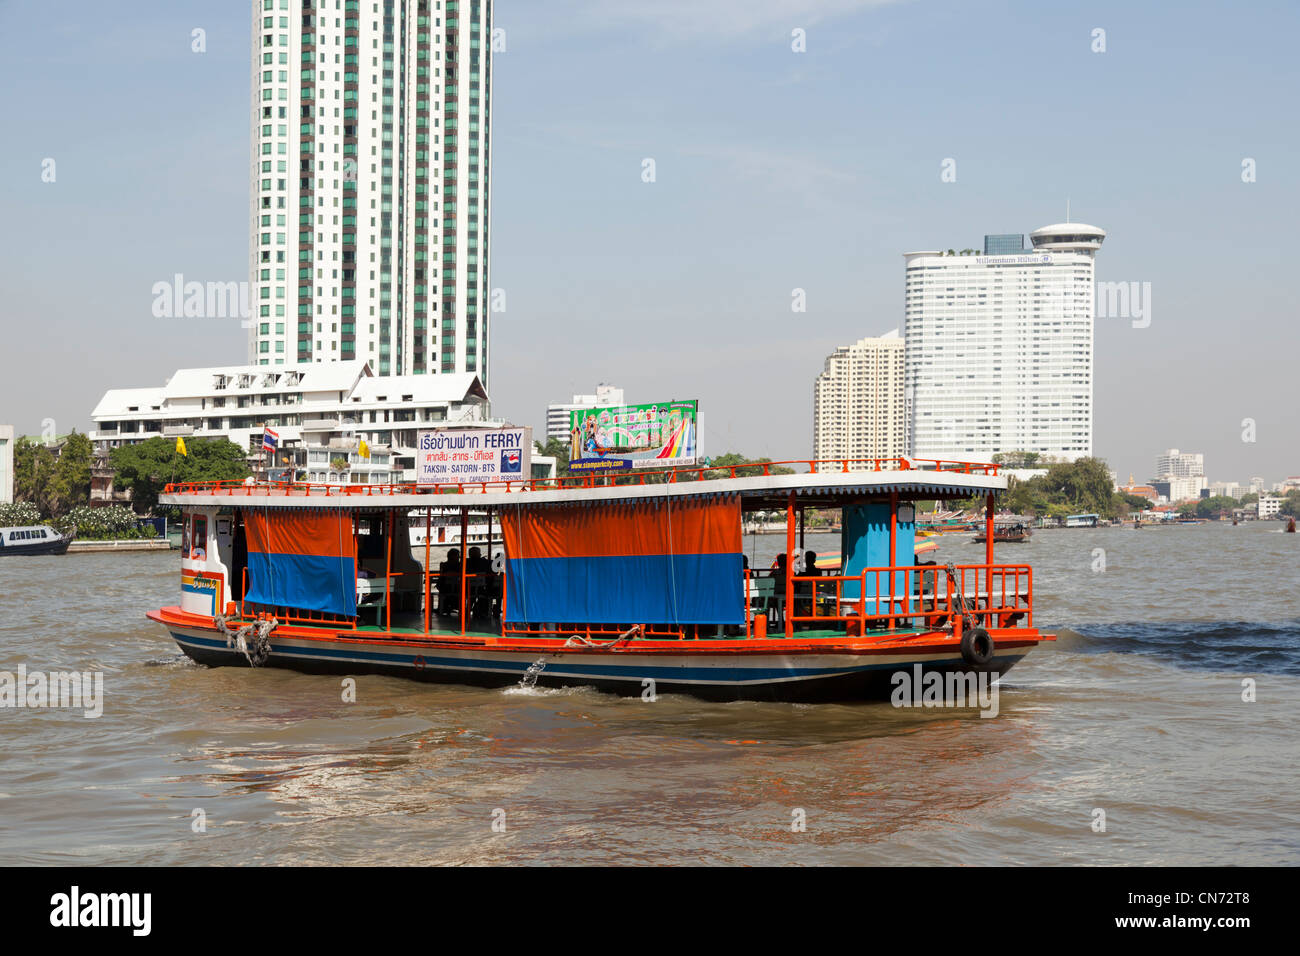 Un vivacemente colorati dei taxi regolari barca sul fiume Chao Phraya (Bangkok) Bateau taxi coloré sur le fleuve Chao Phraya (Bangkok). Foto Stock